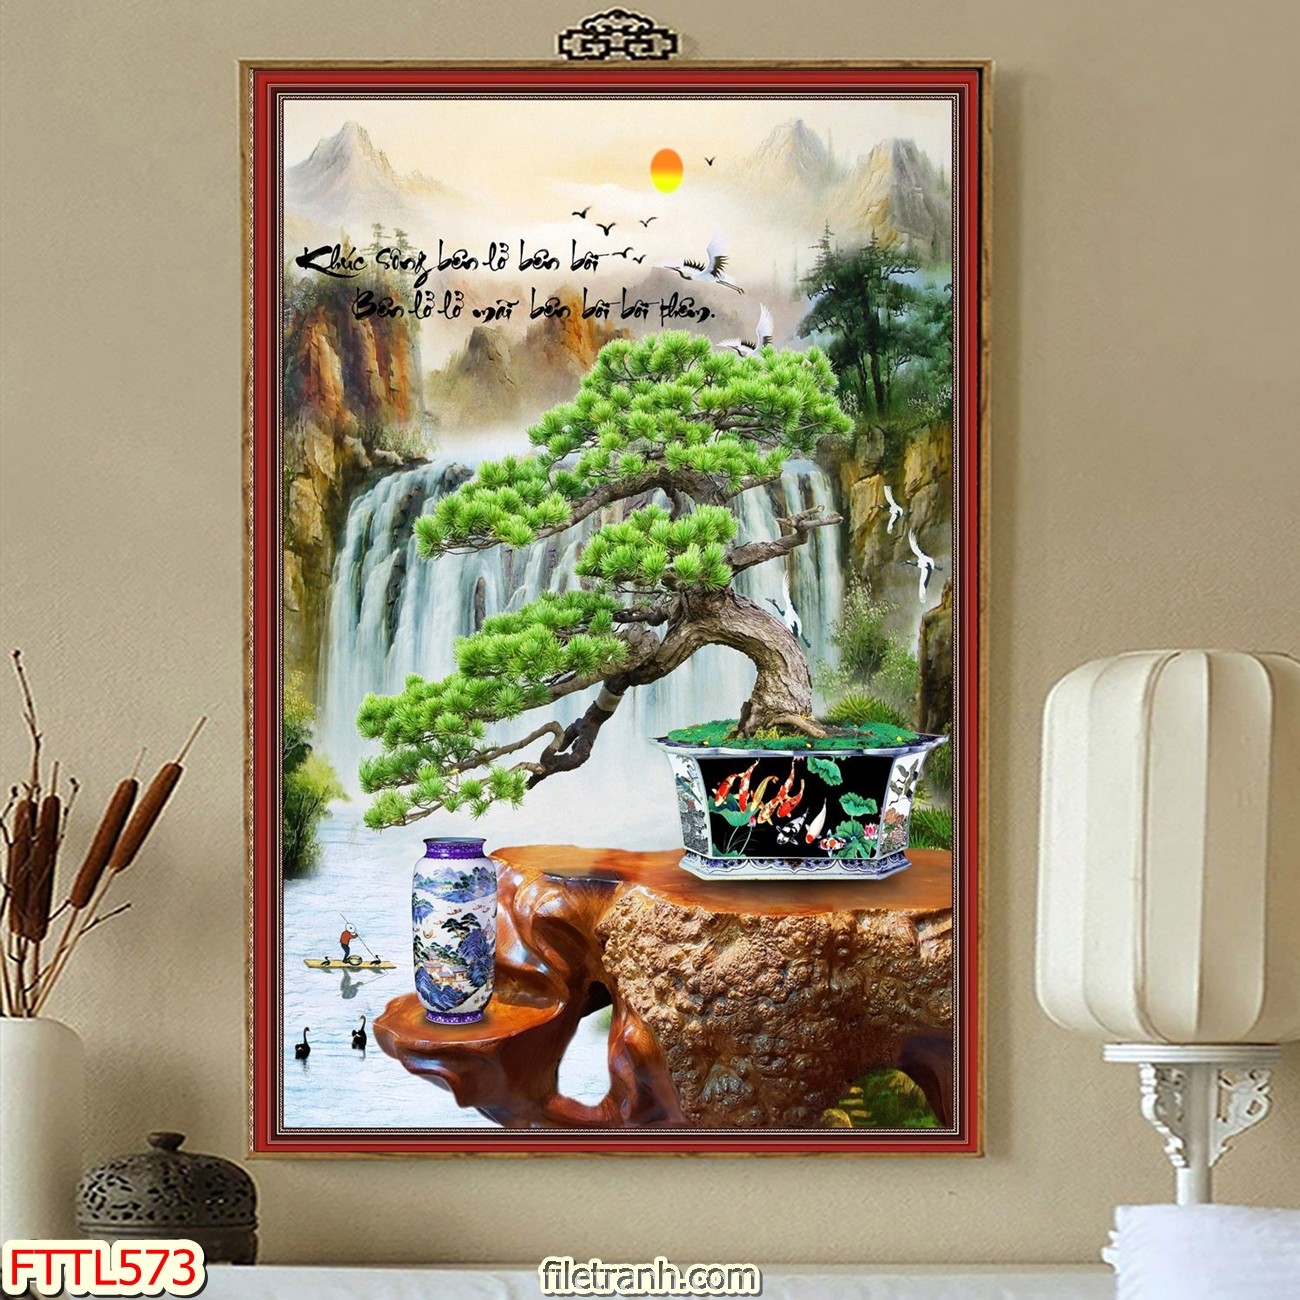 https://filetranh.com/file-tranh-chau-mai-bonsai/file-tranh-chau-mai-bonsai-fttl573.html